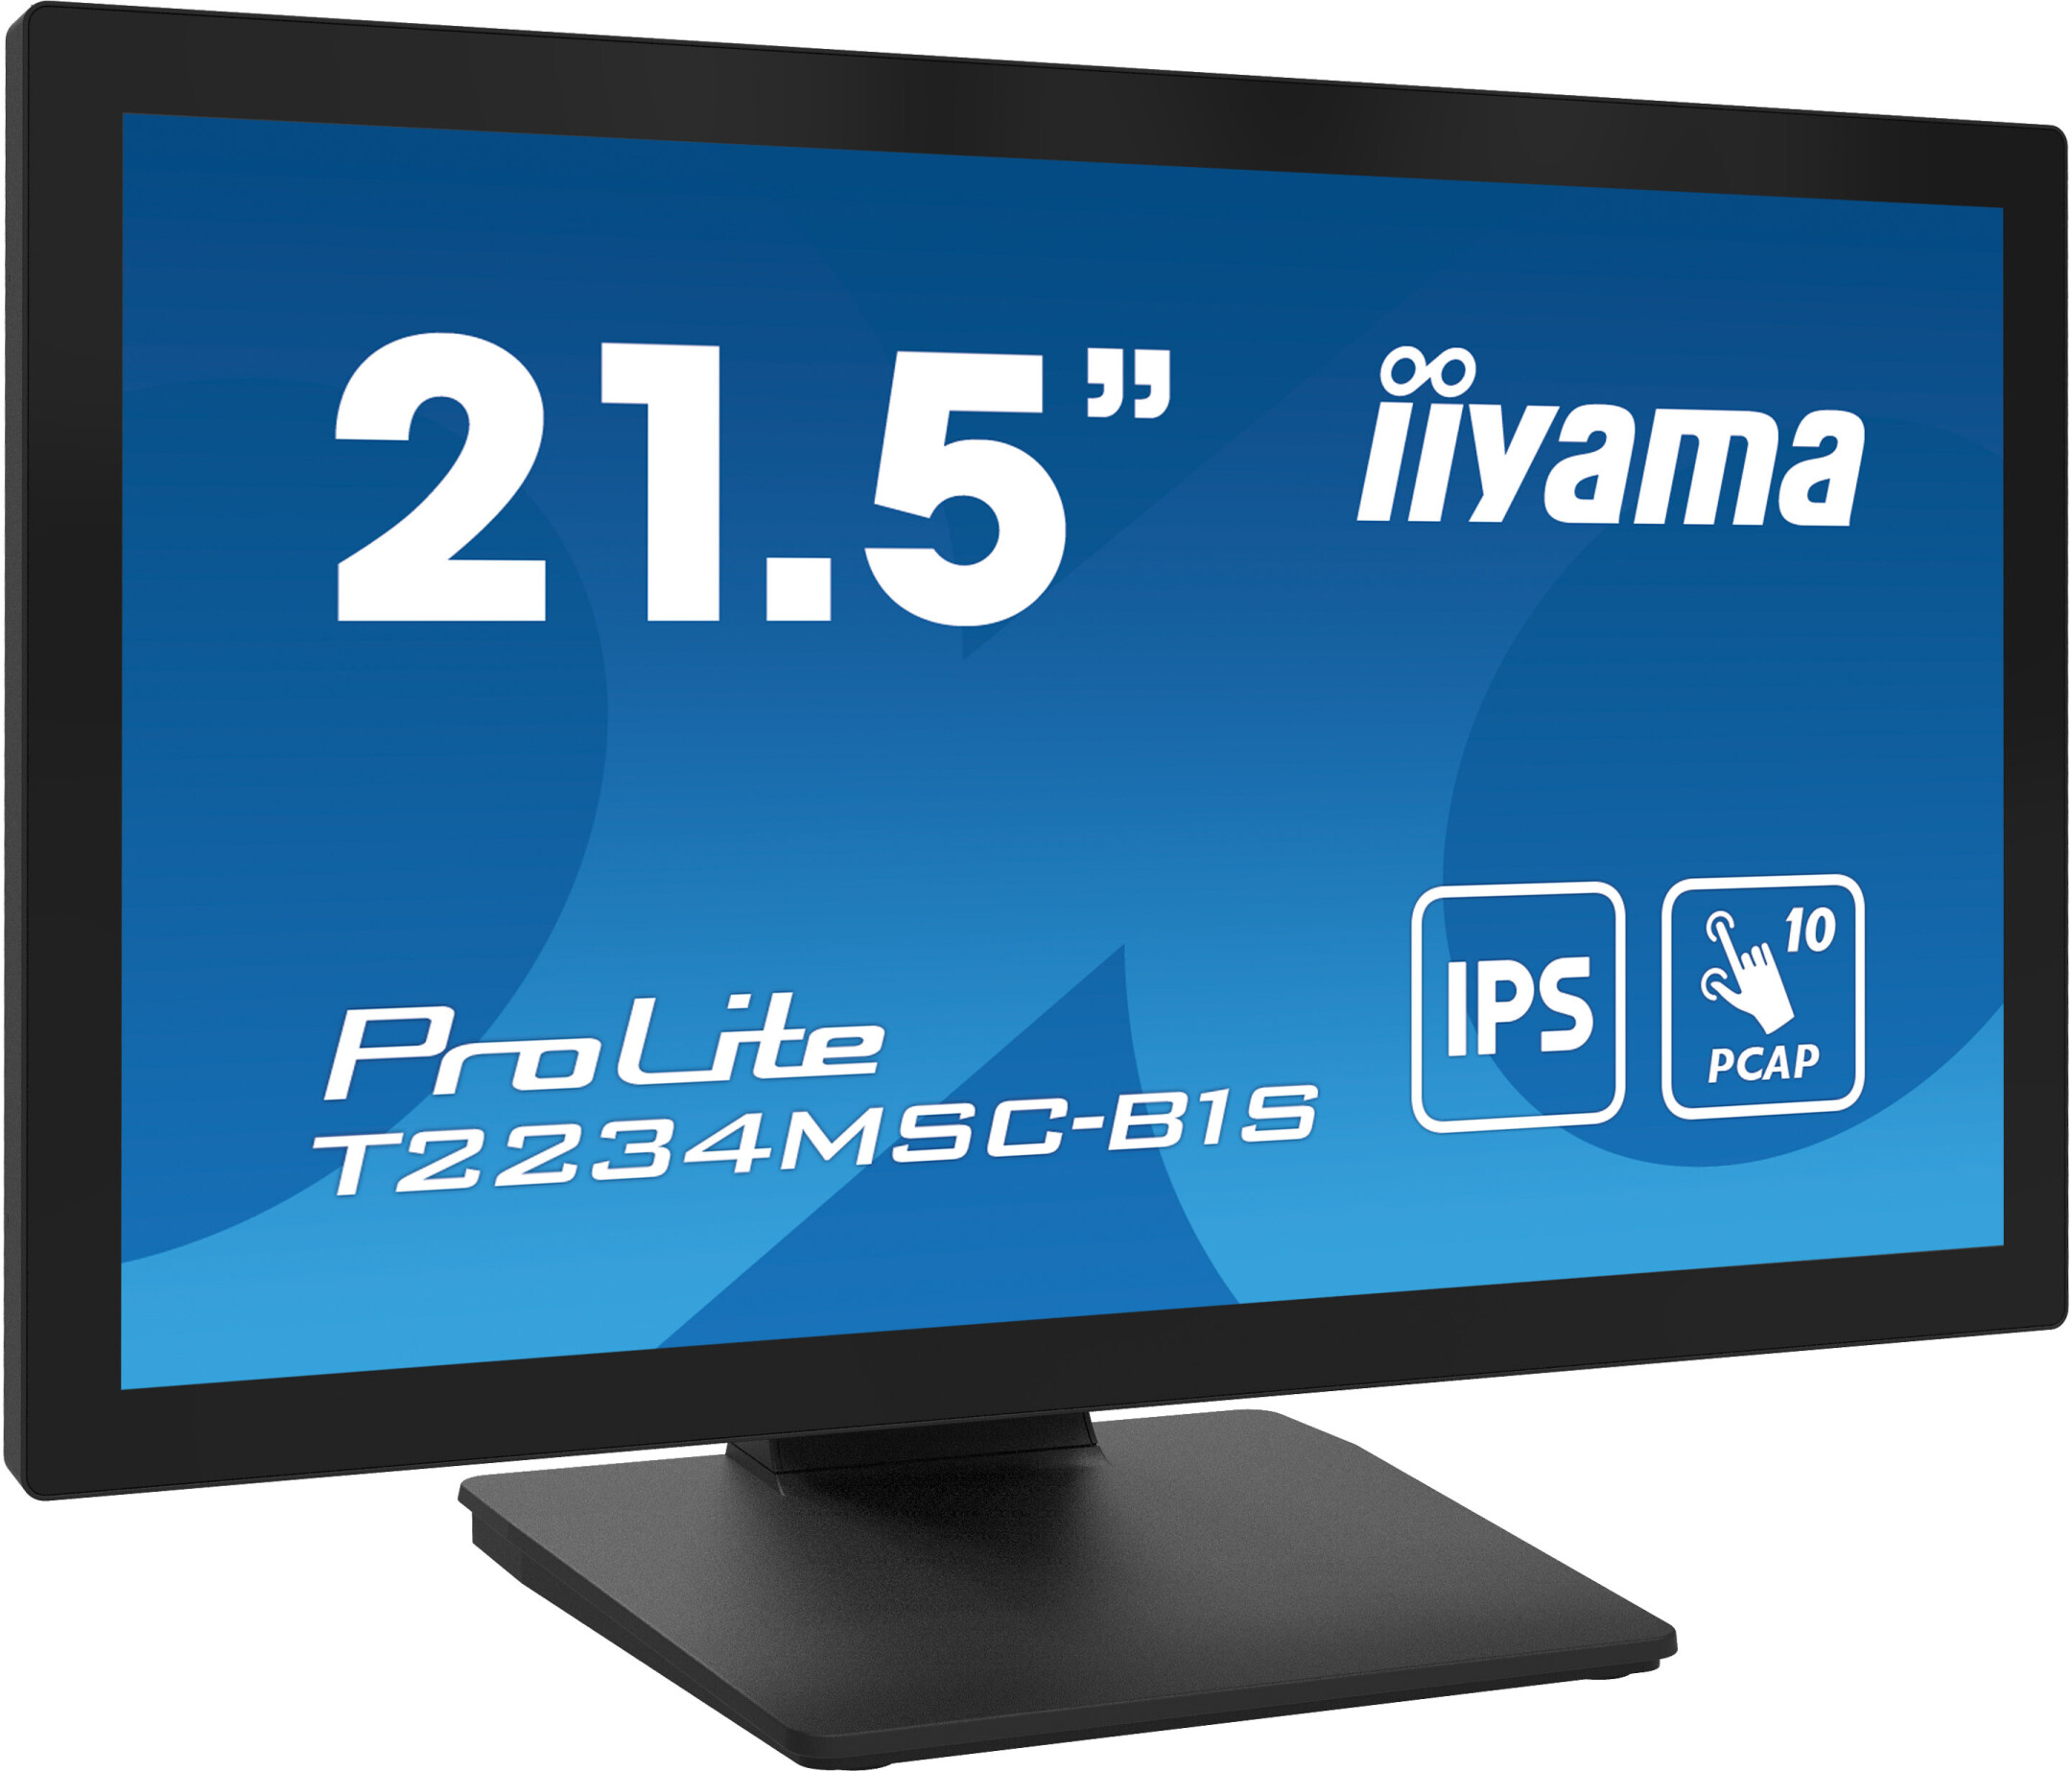 iiyama-PROLITE-T2234MSC-B1S